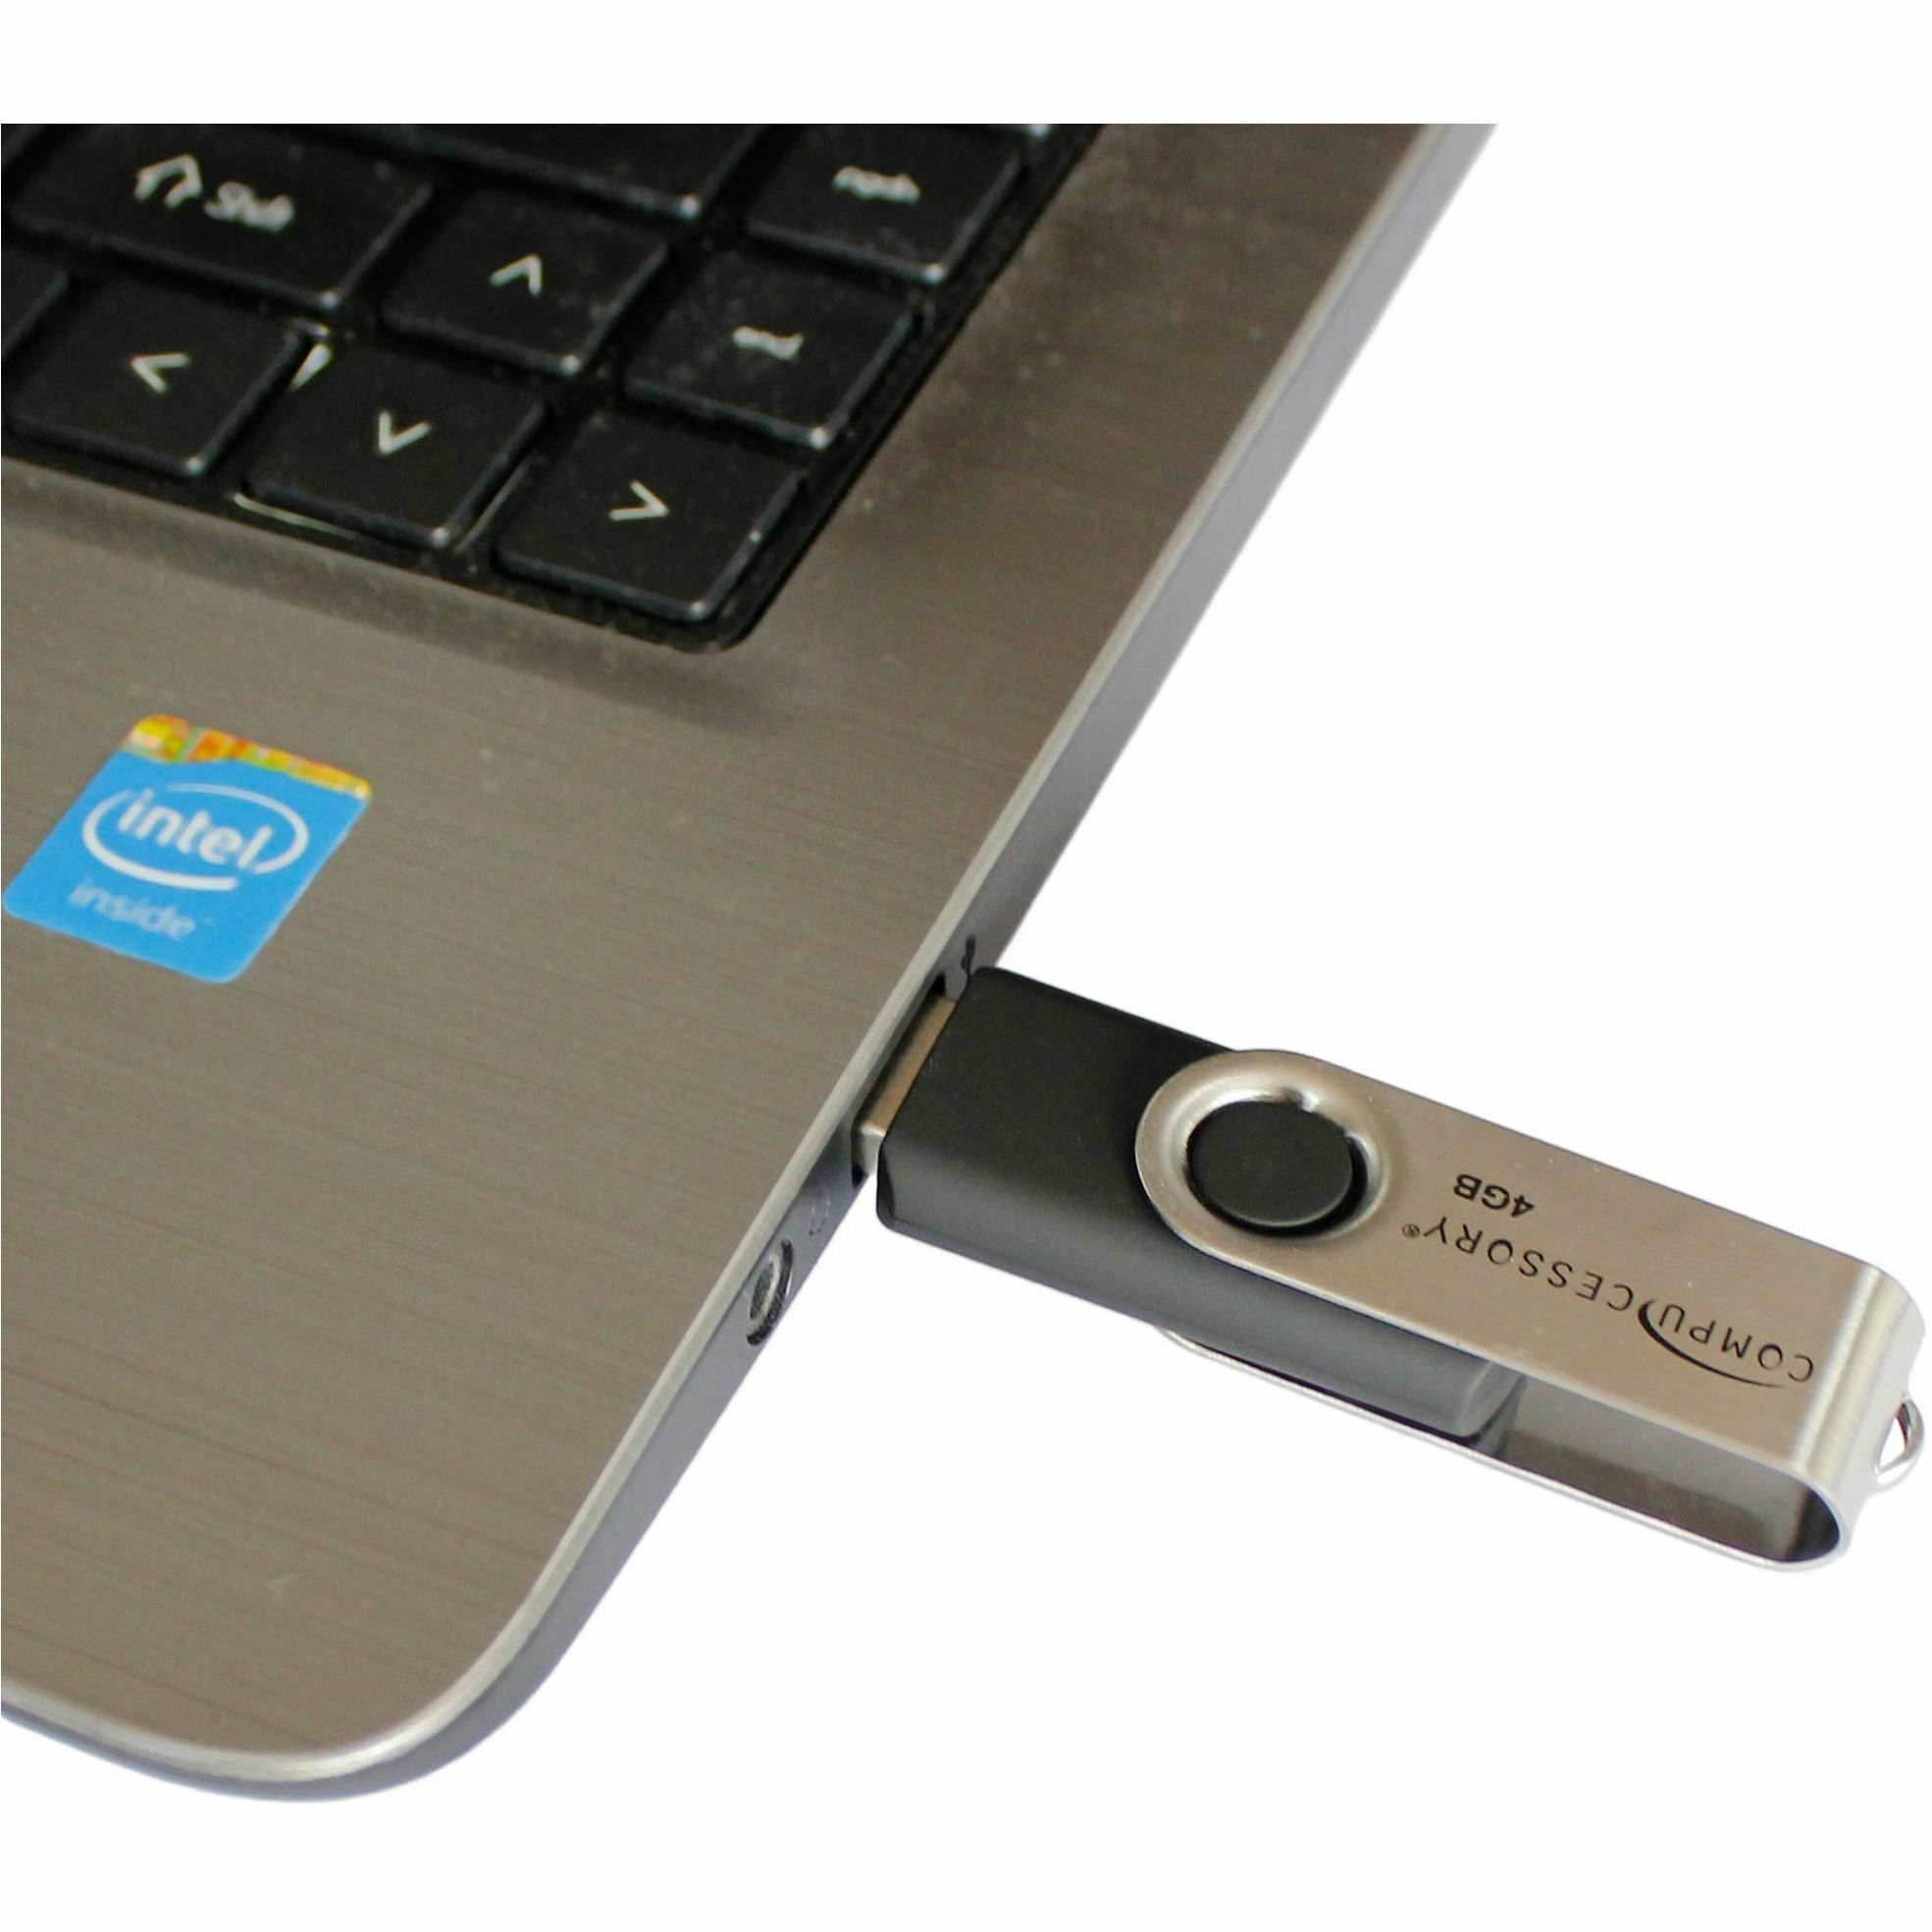 32g USB Stick (Copy)  Tubers - The Video Creators Academy